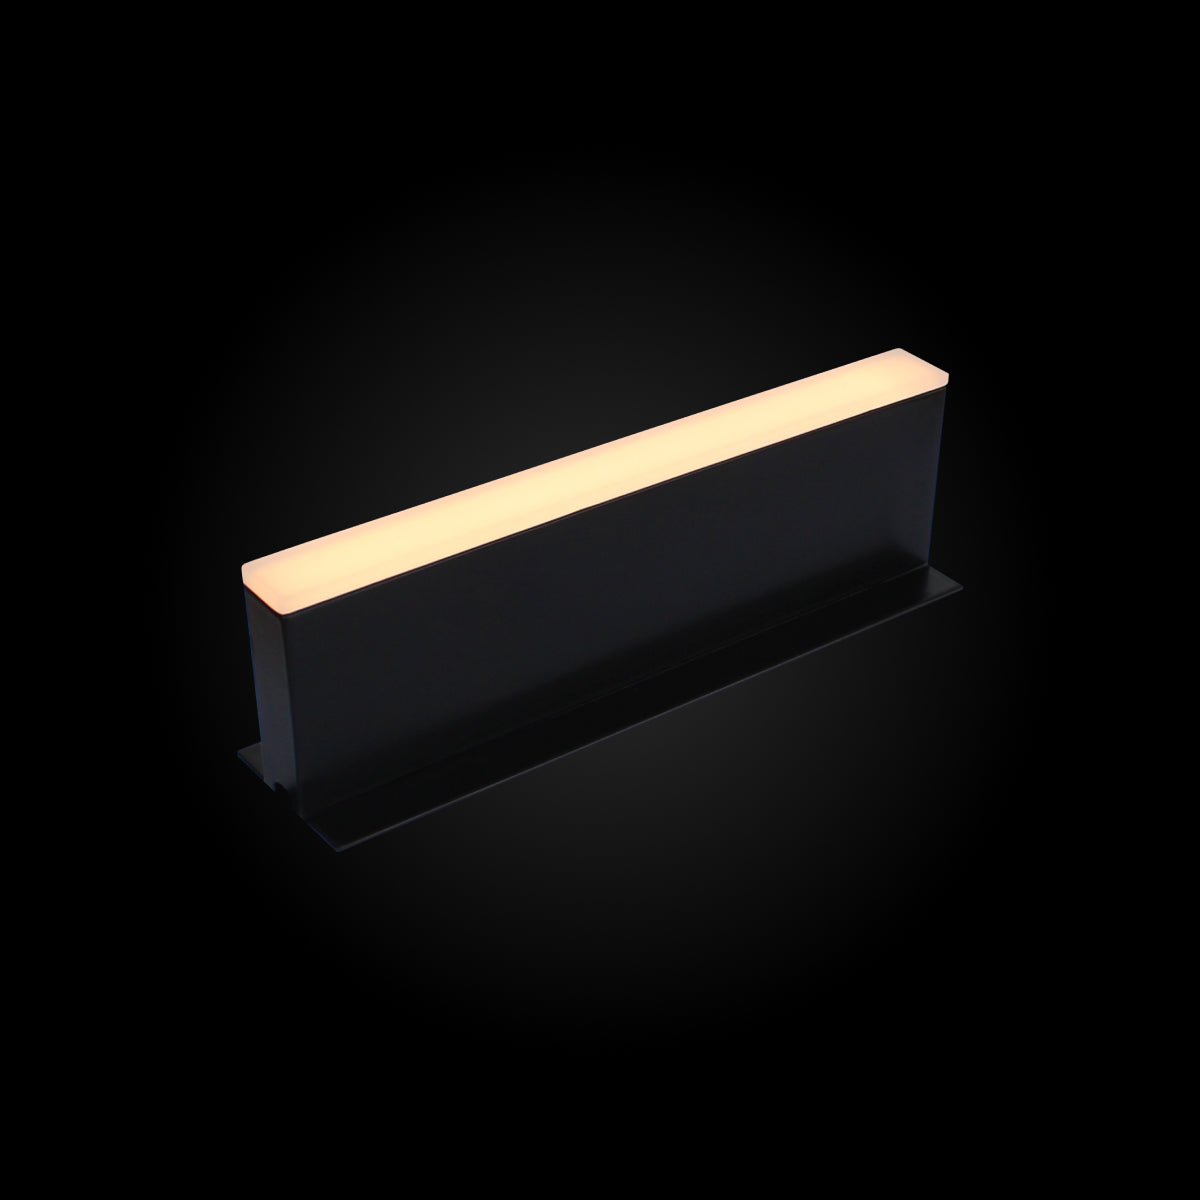 Acrylic Edge Lit LED Lighting Profiles for Sale Online